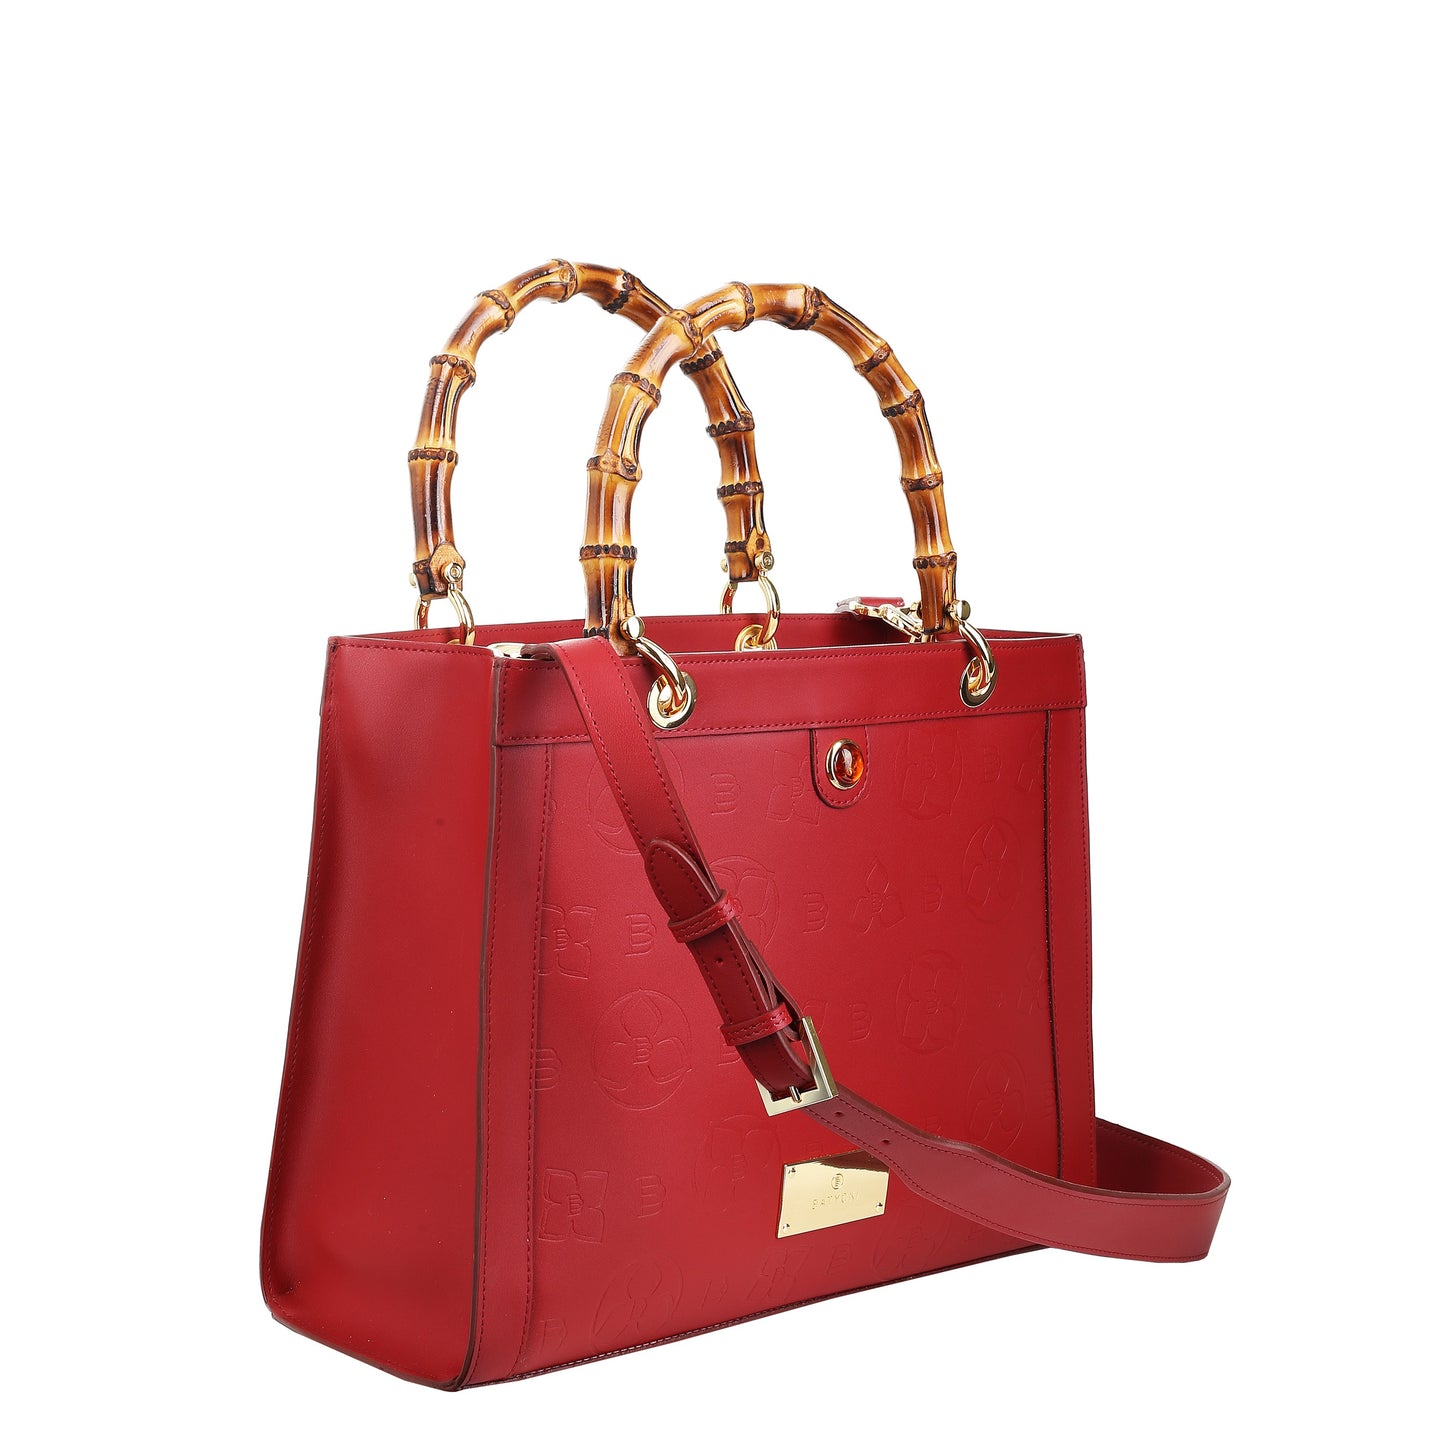 THENA NAPA CLARET women's leather handbag